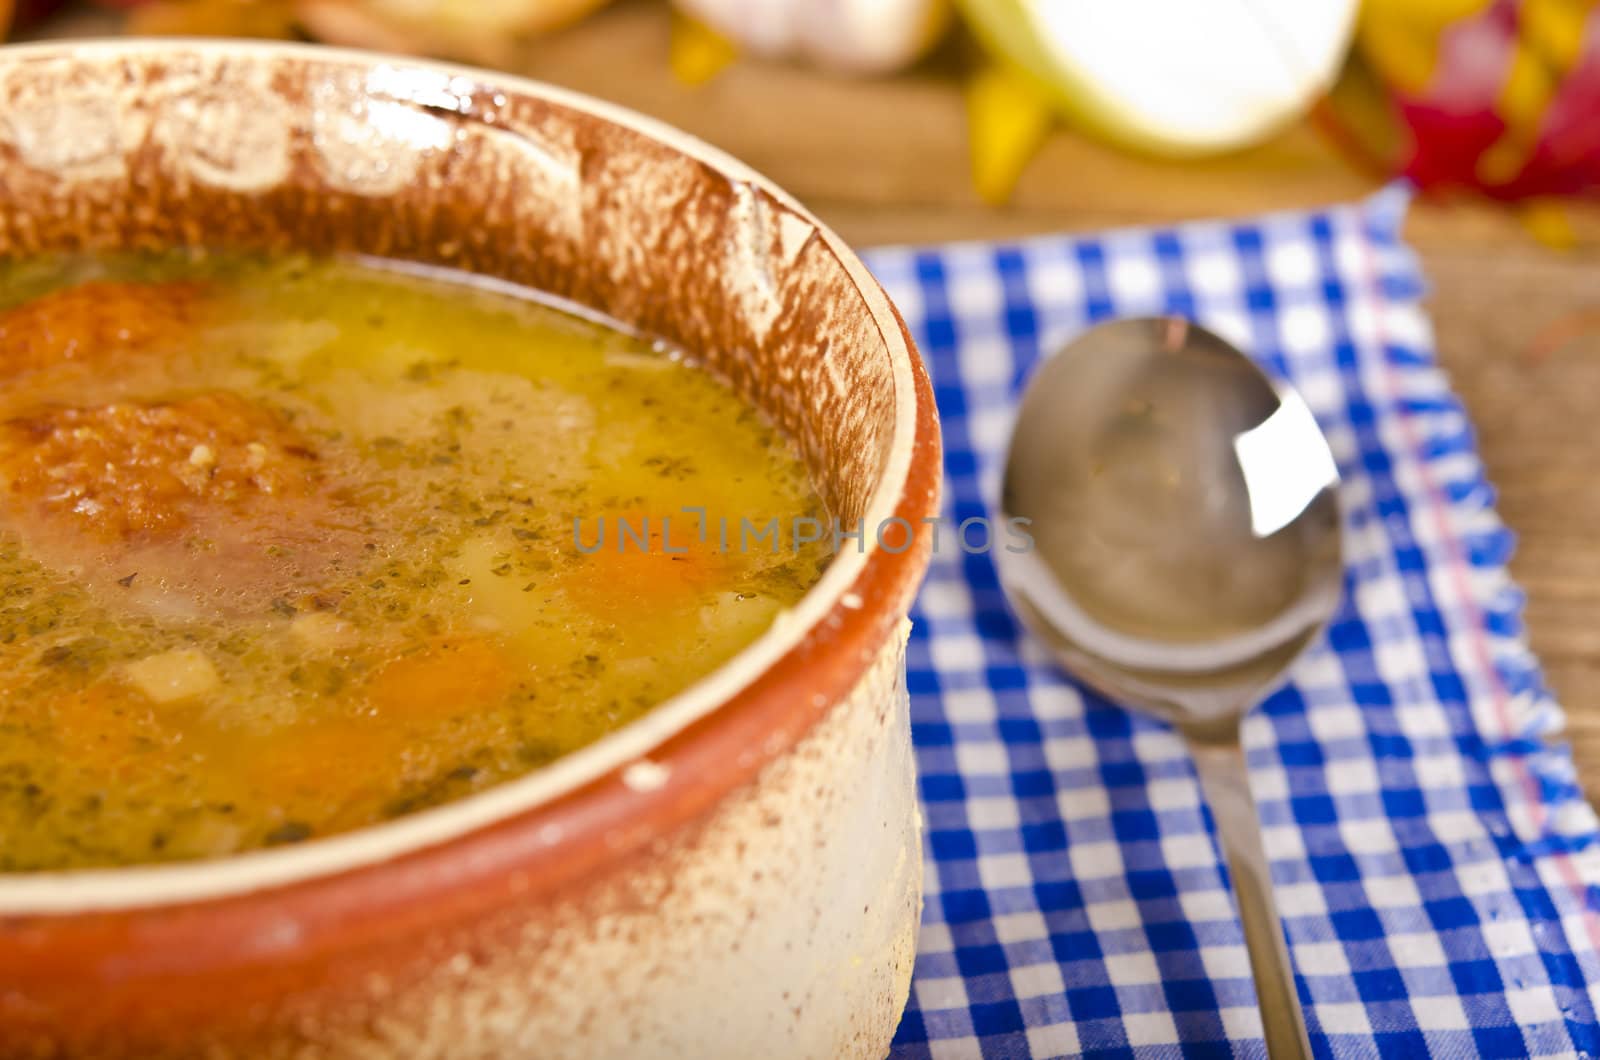 Pea soup (Polish Grochowka) by Darius.Dzinnik